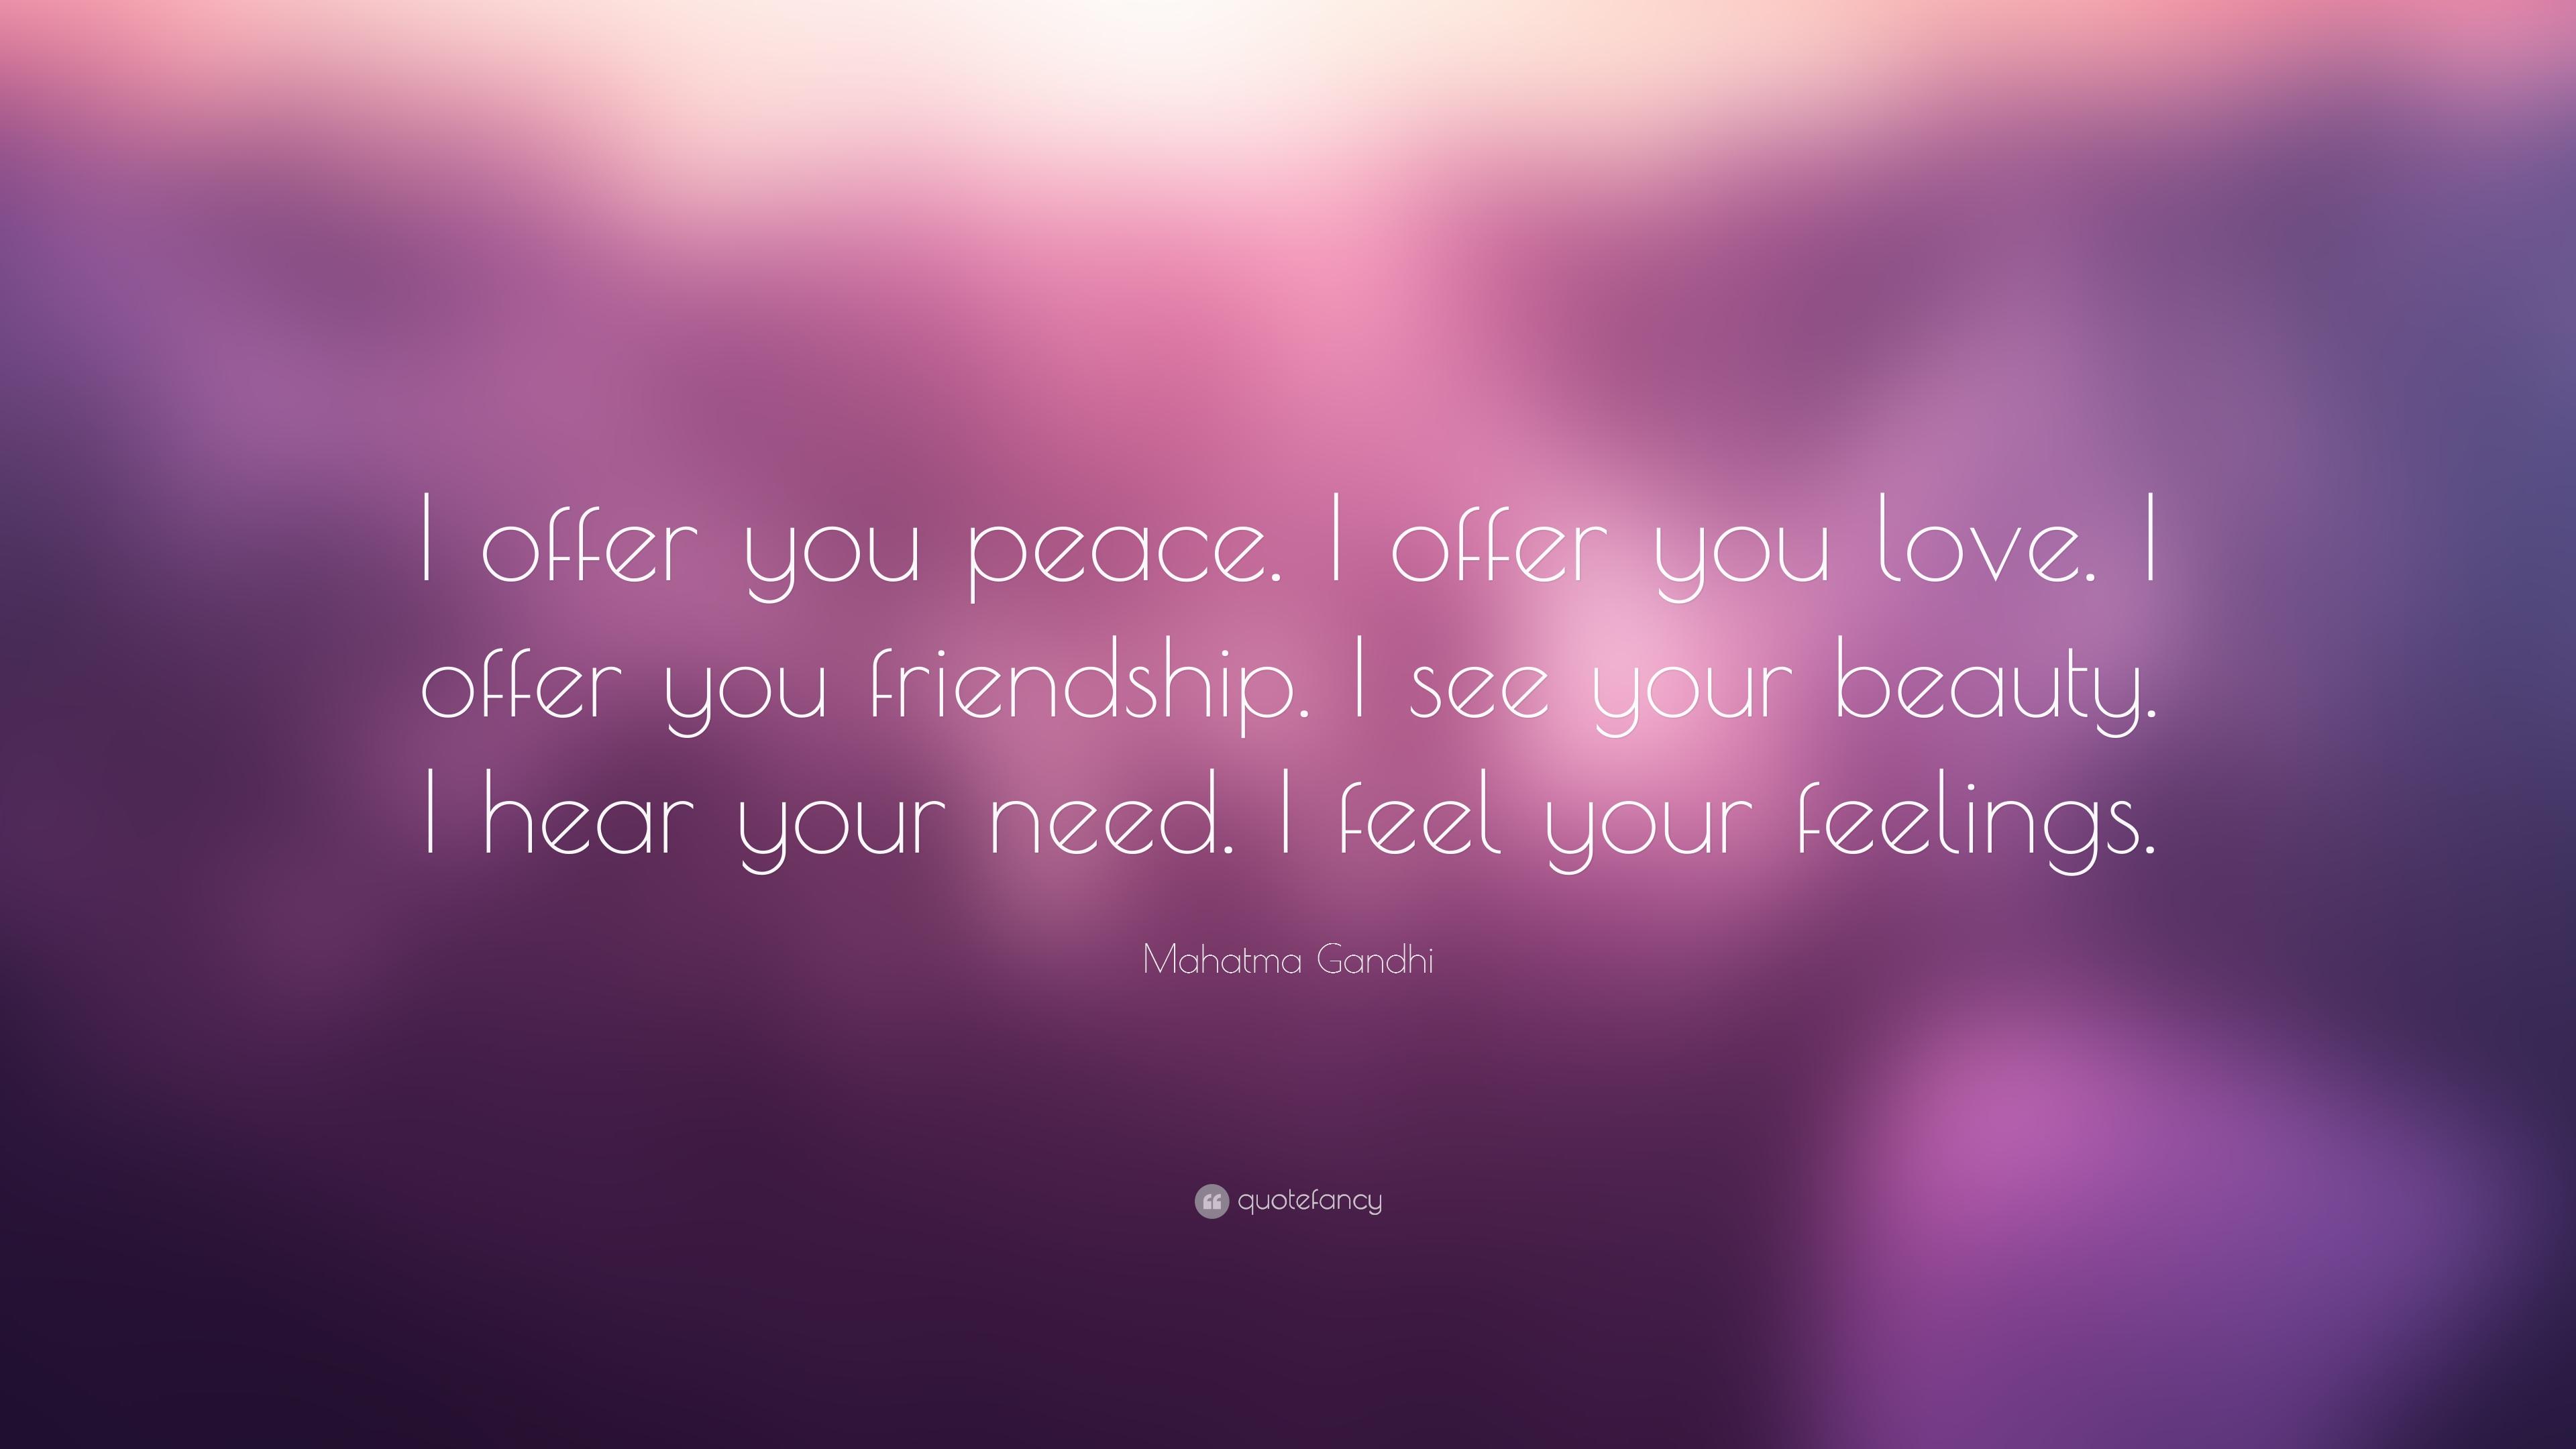 Mahatma Gandhi Quote: “I offer you peace. I offer you love. I offer